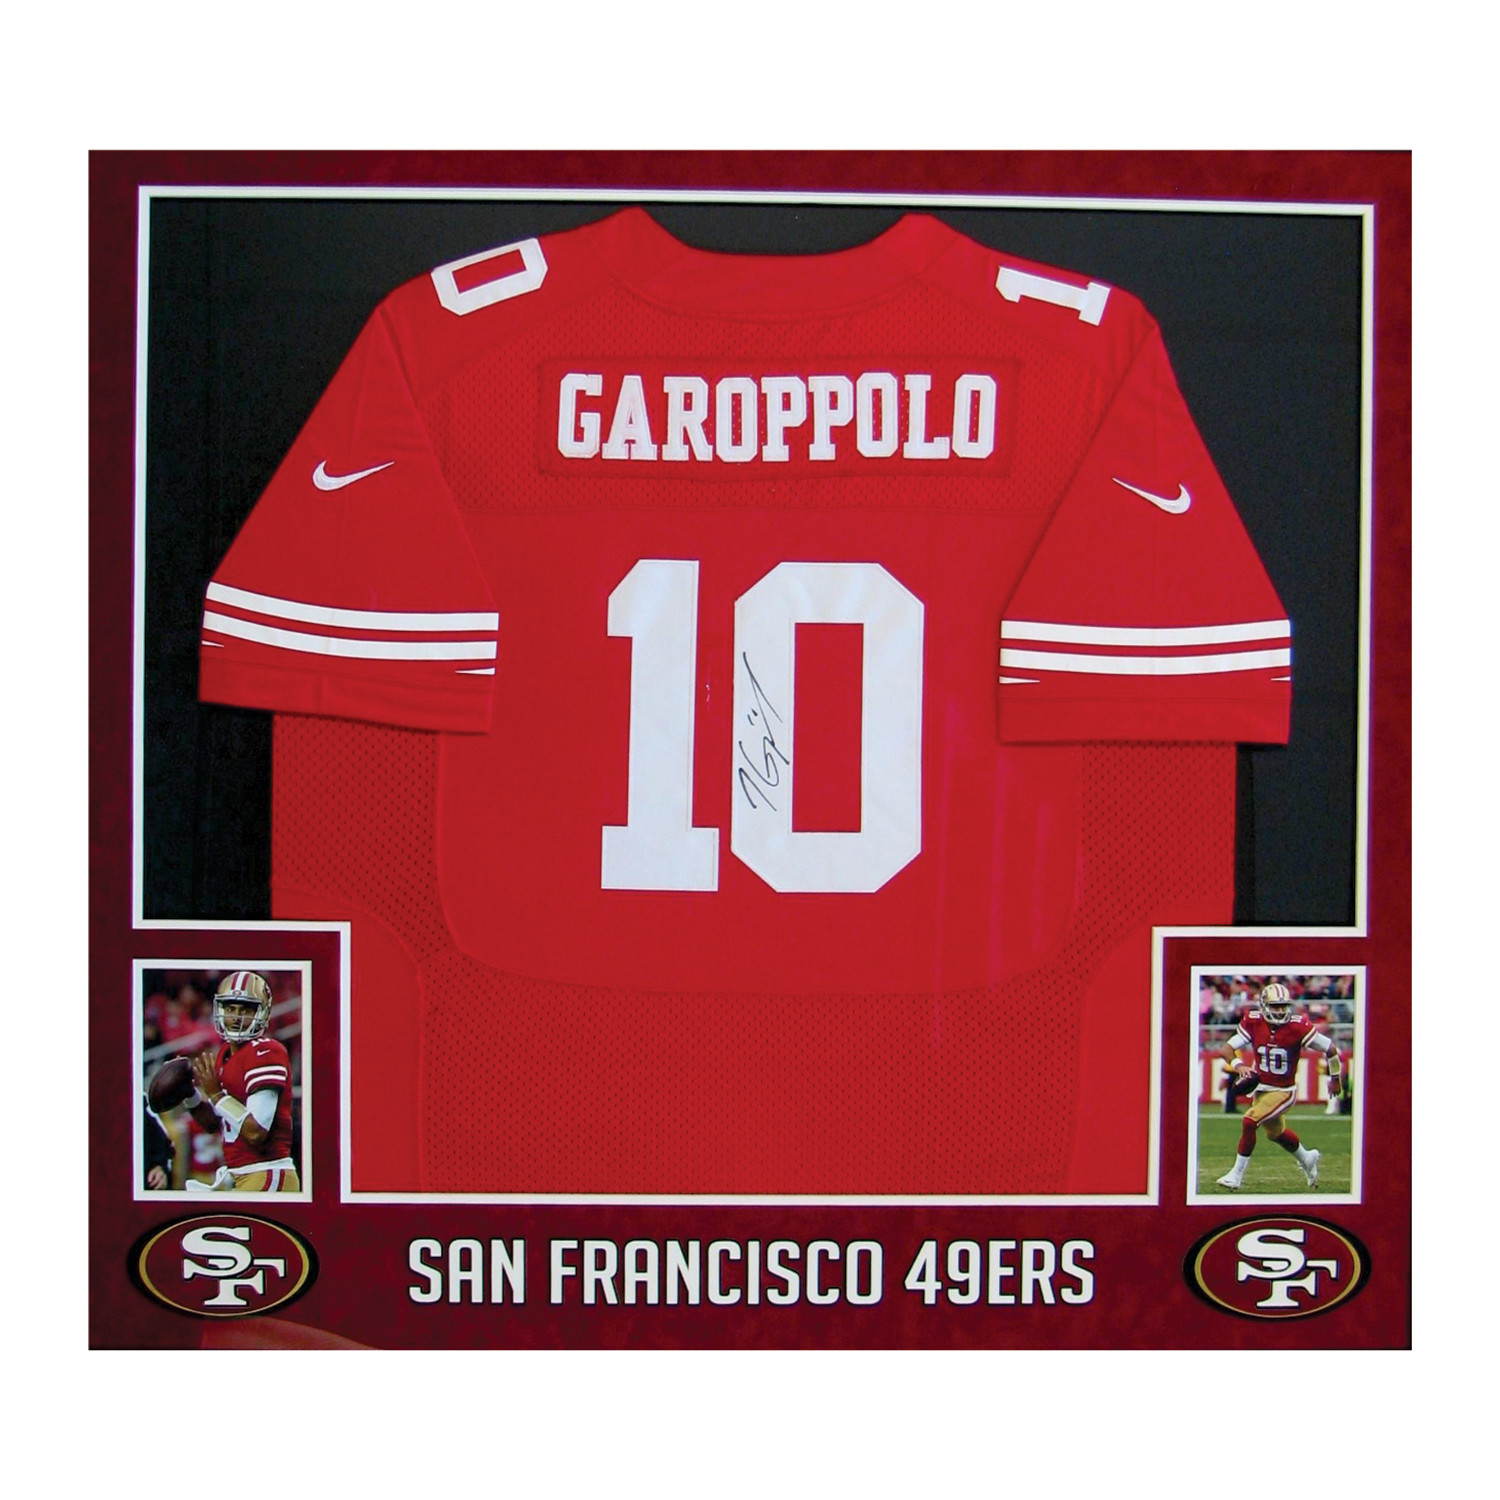 garoppolo signed jersey